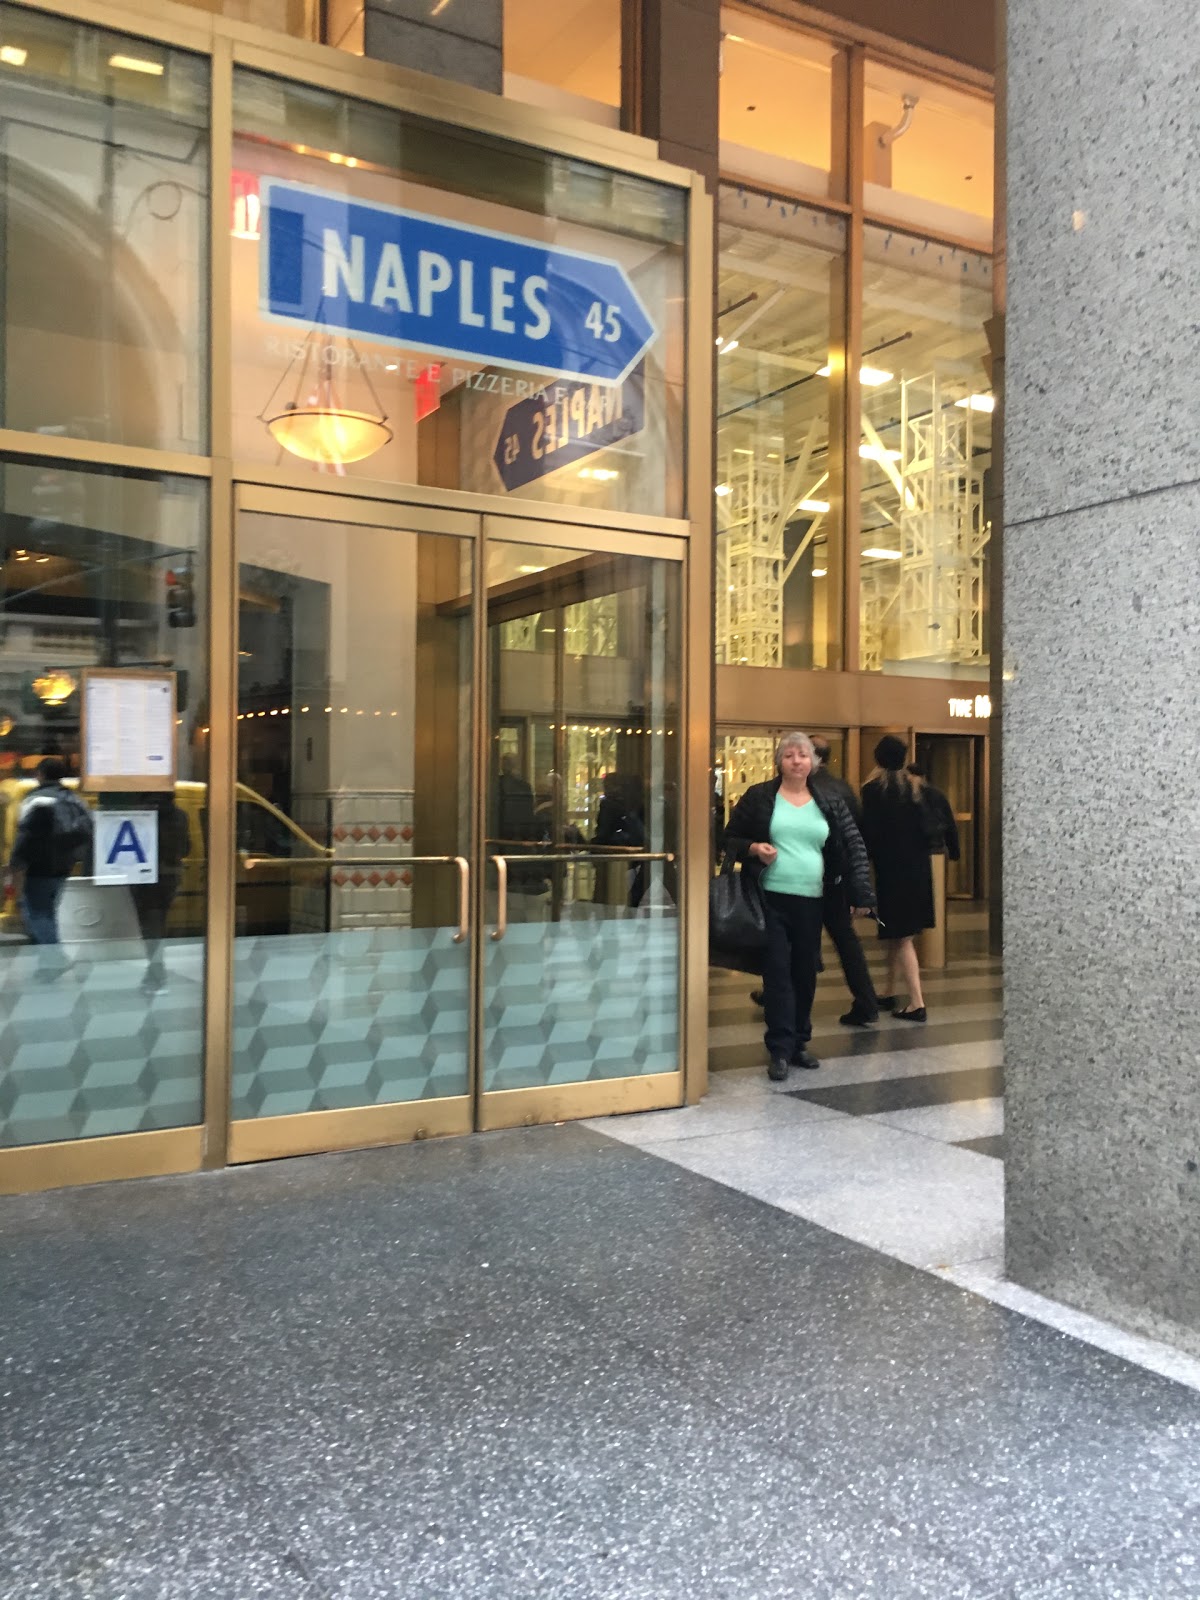 Photo of Naples 45 Ristorante e Pizzeria in New York City, New York, United States - 5 Picture of Restaurant, Food, Point of interest, Establishment, Bar